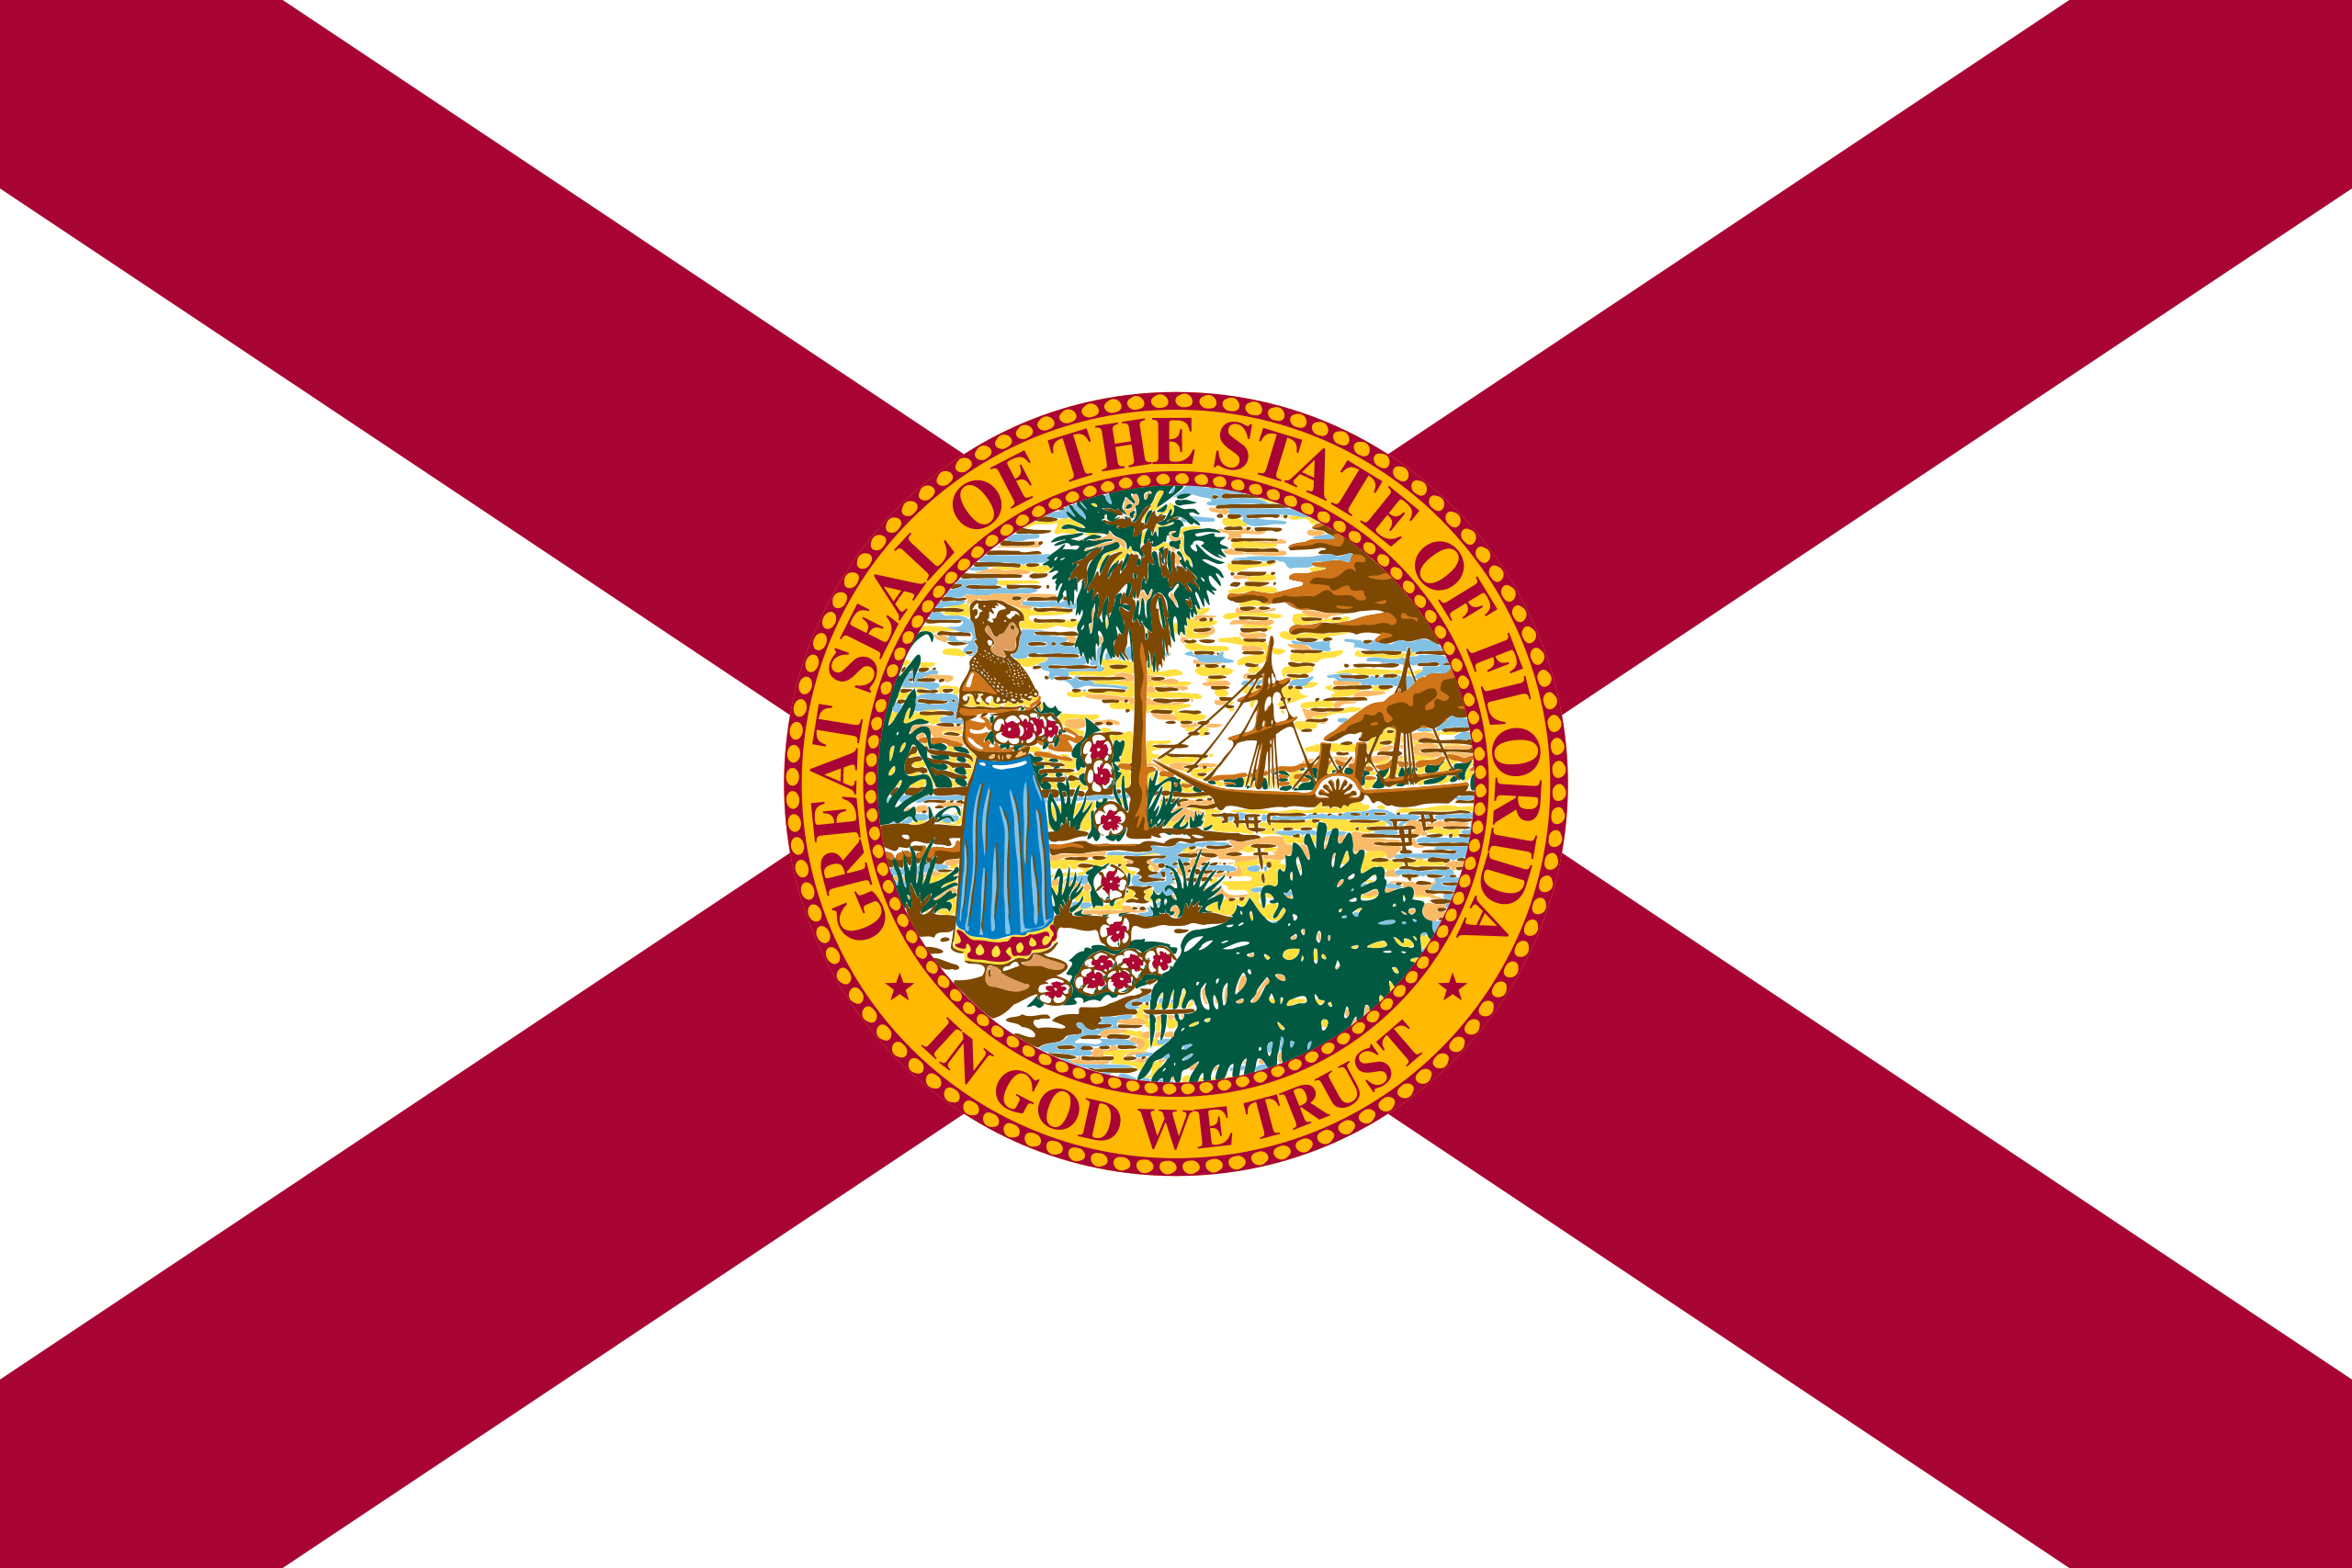 The Florida State Flag design